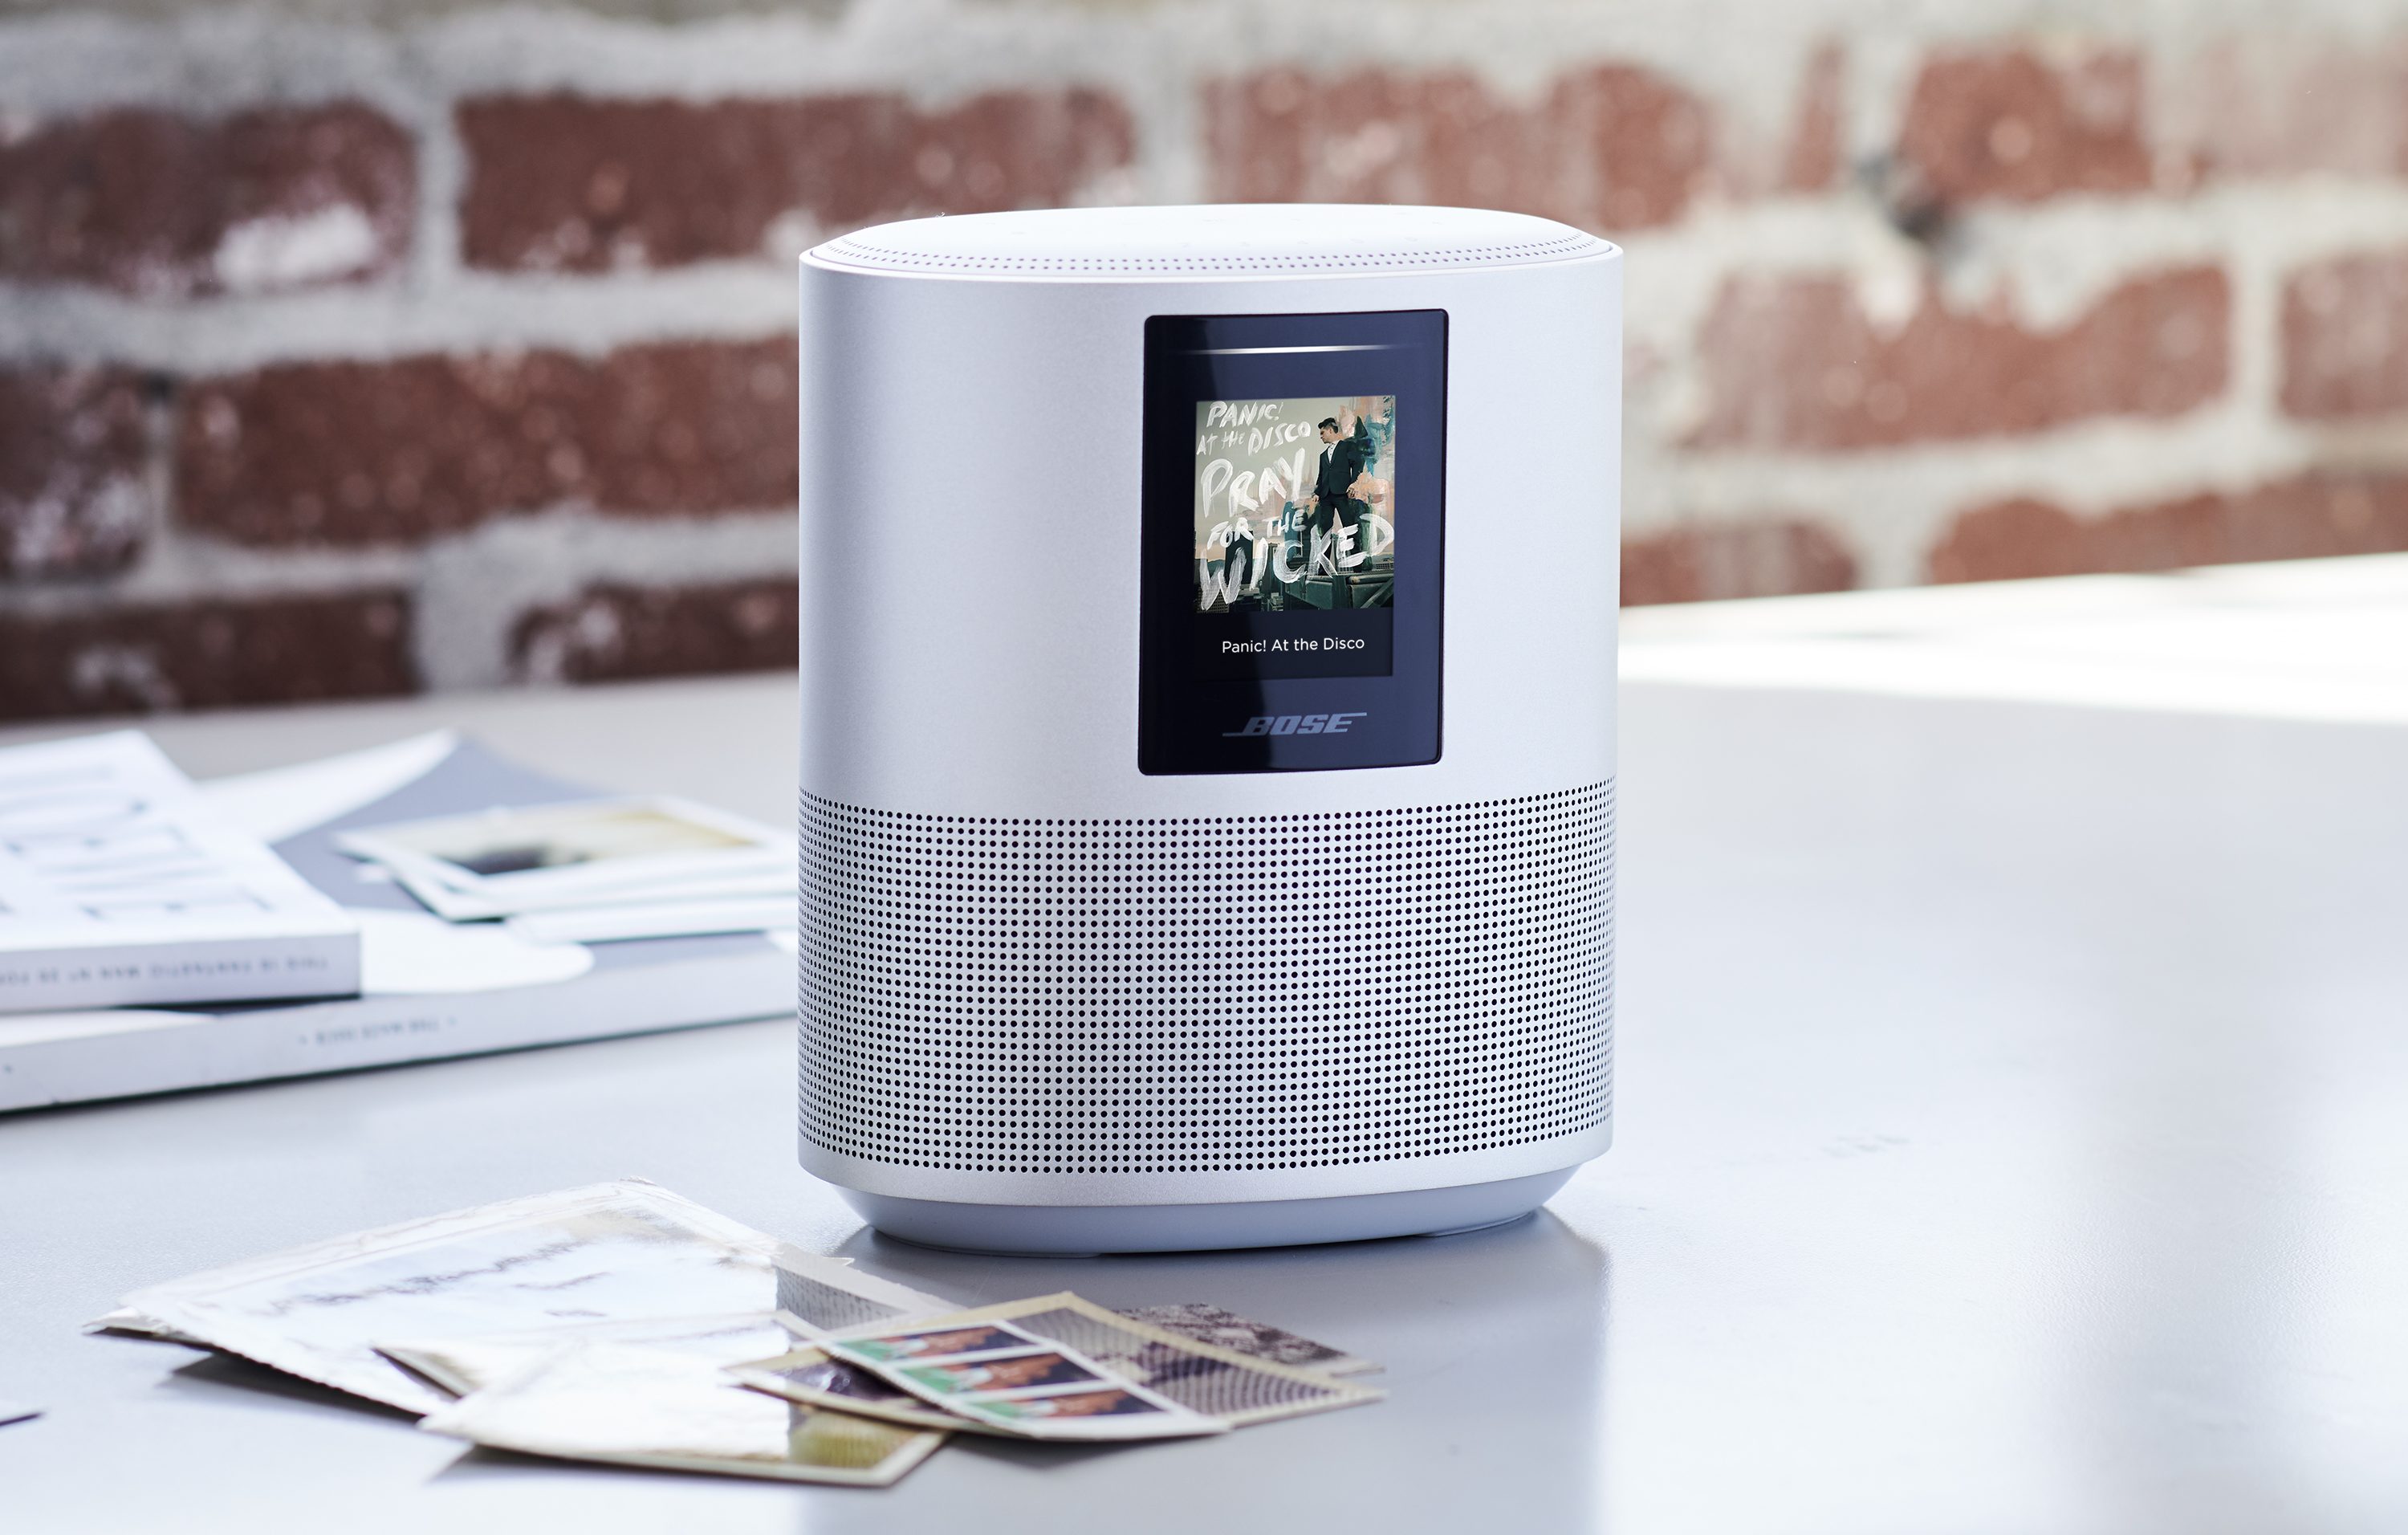 Bose unleash Alexa-powered Smart speakers with screens